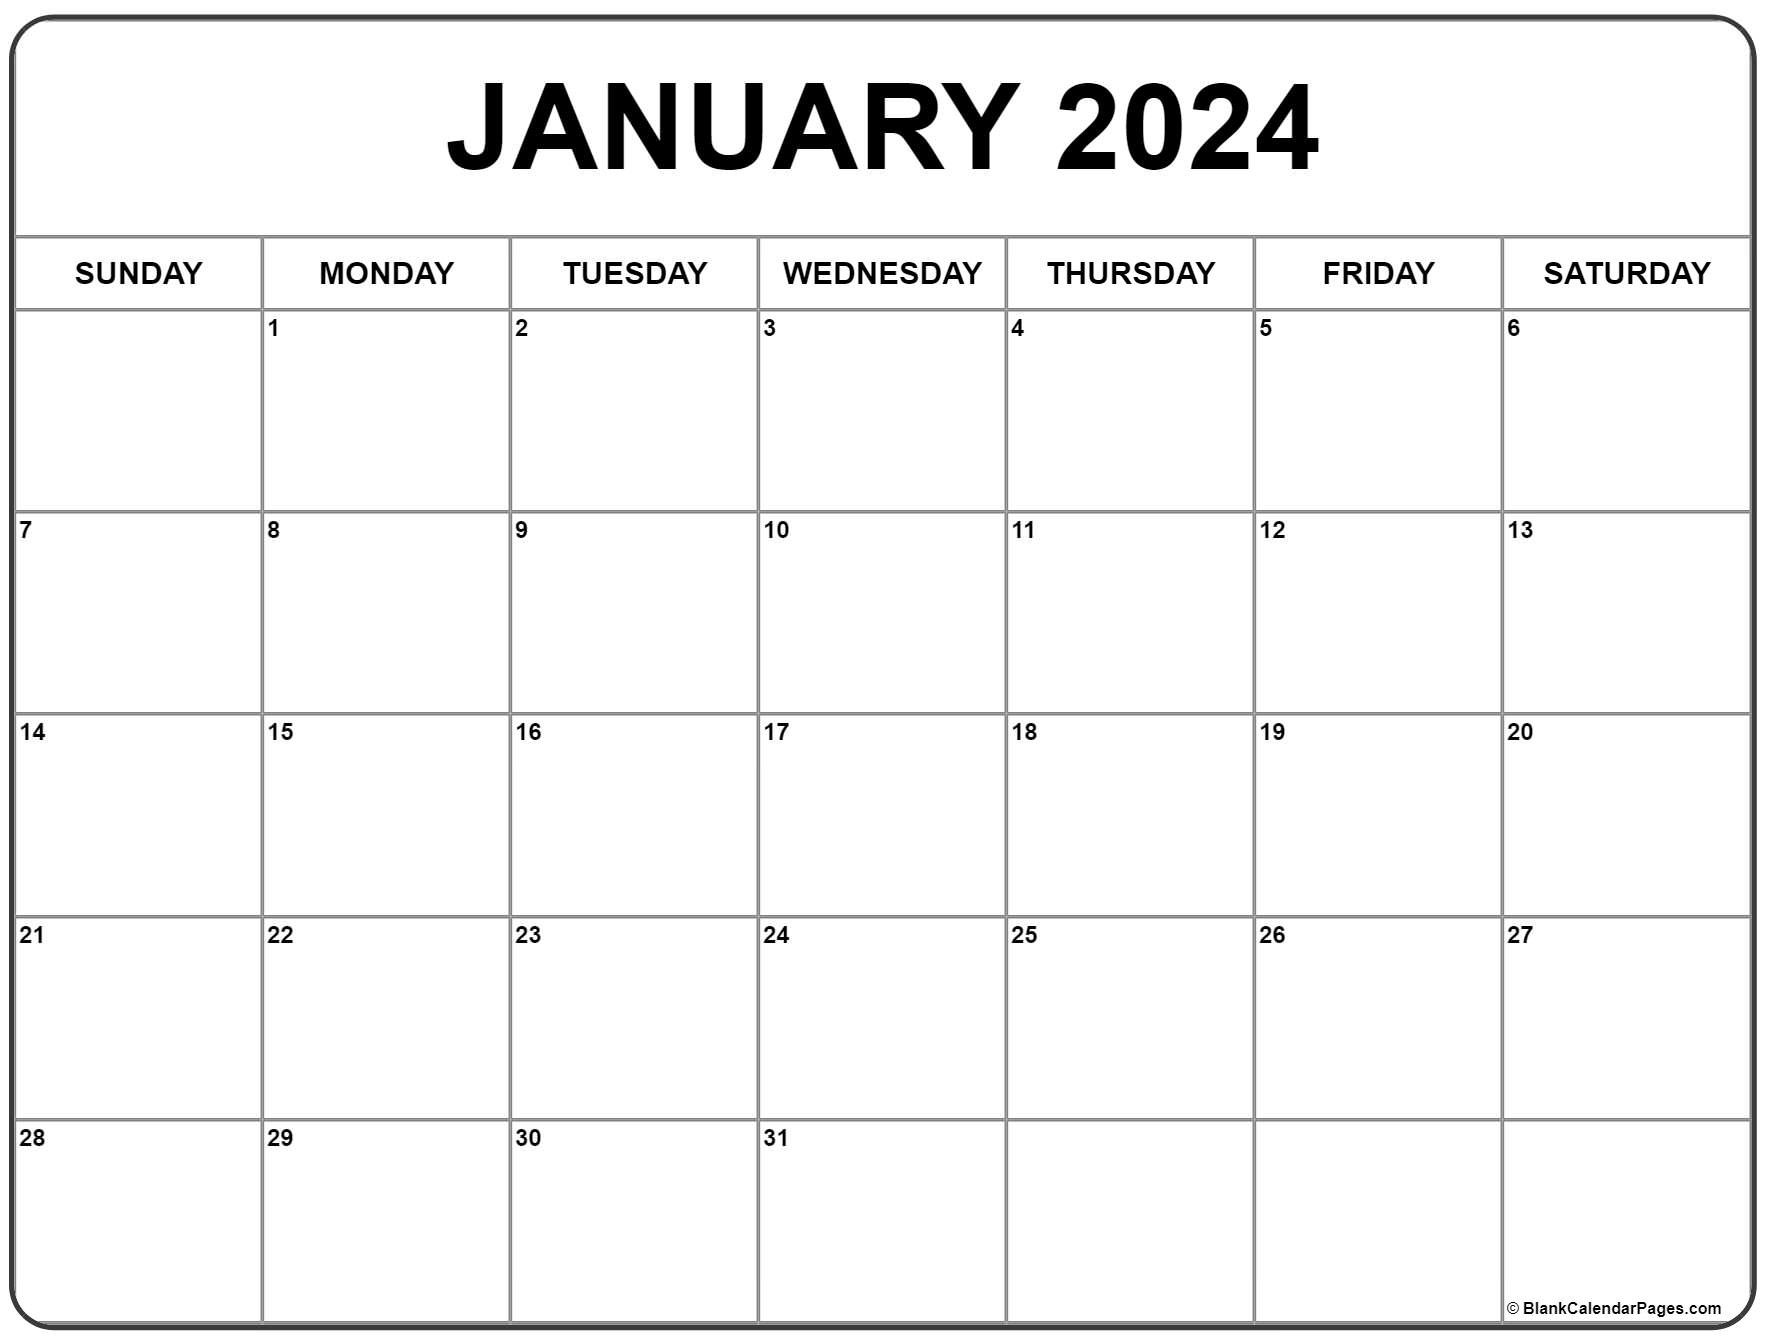 Free Calendar January 2022 January 2022 Calendar | Free Printable Calendar Templates